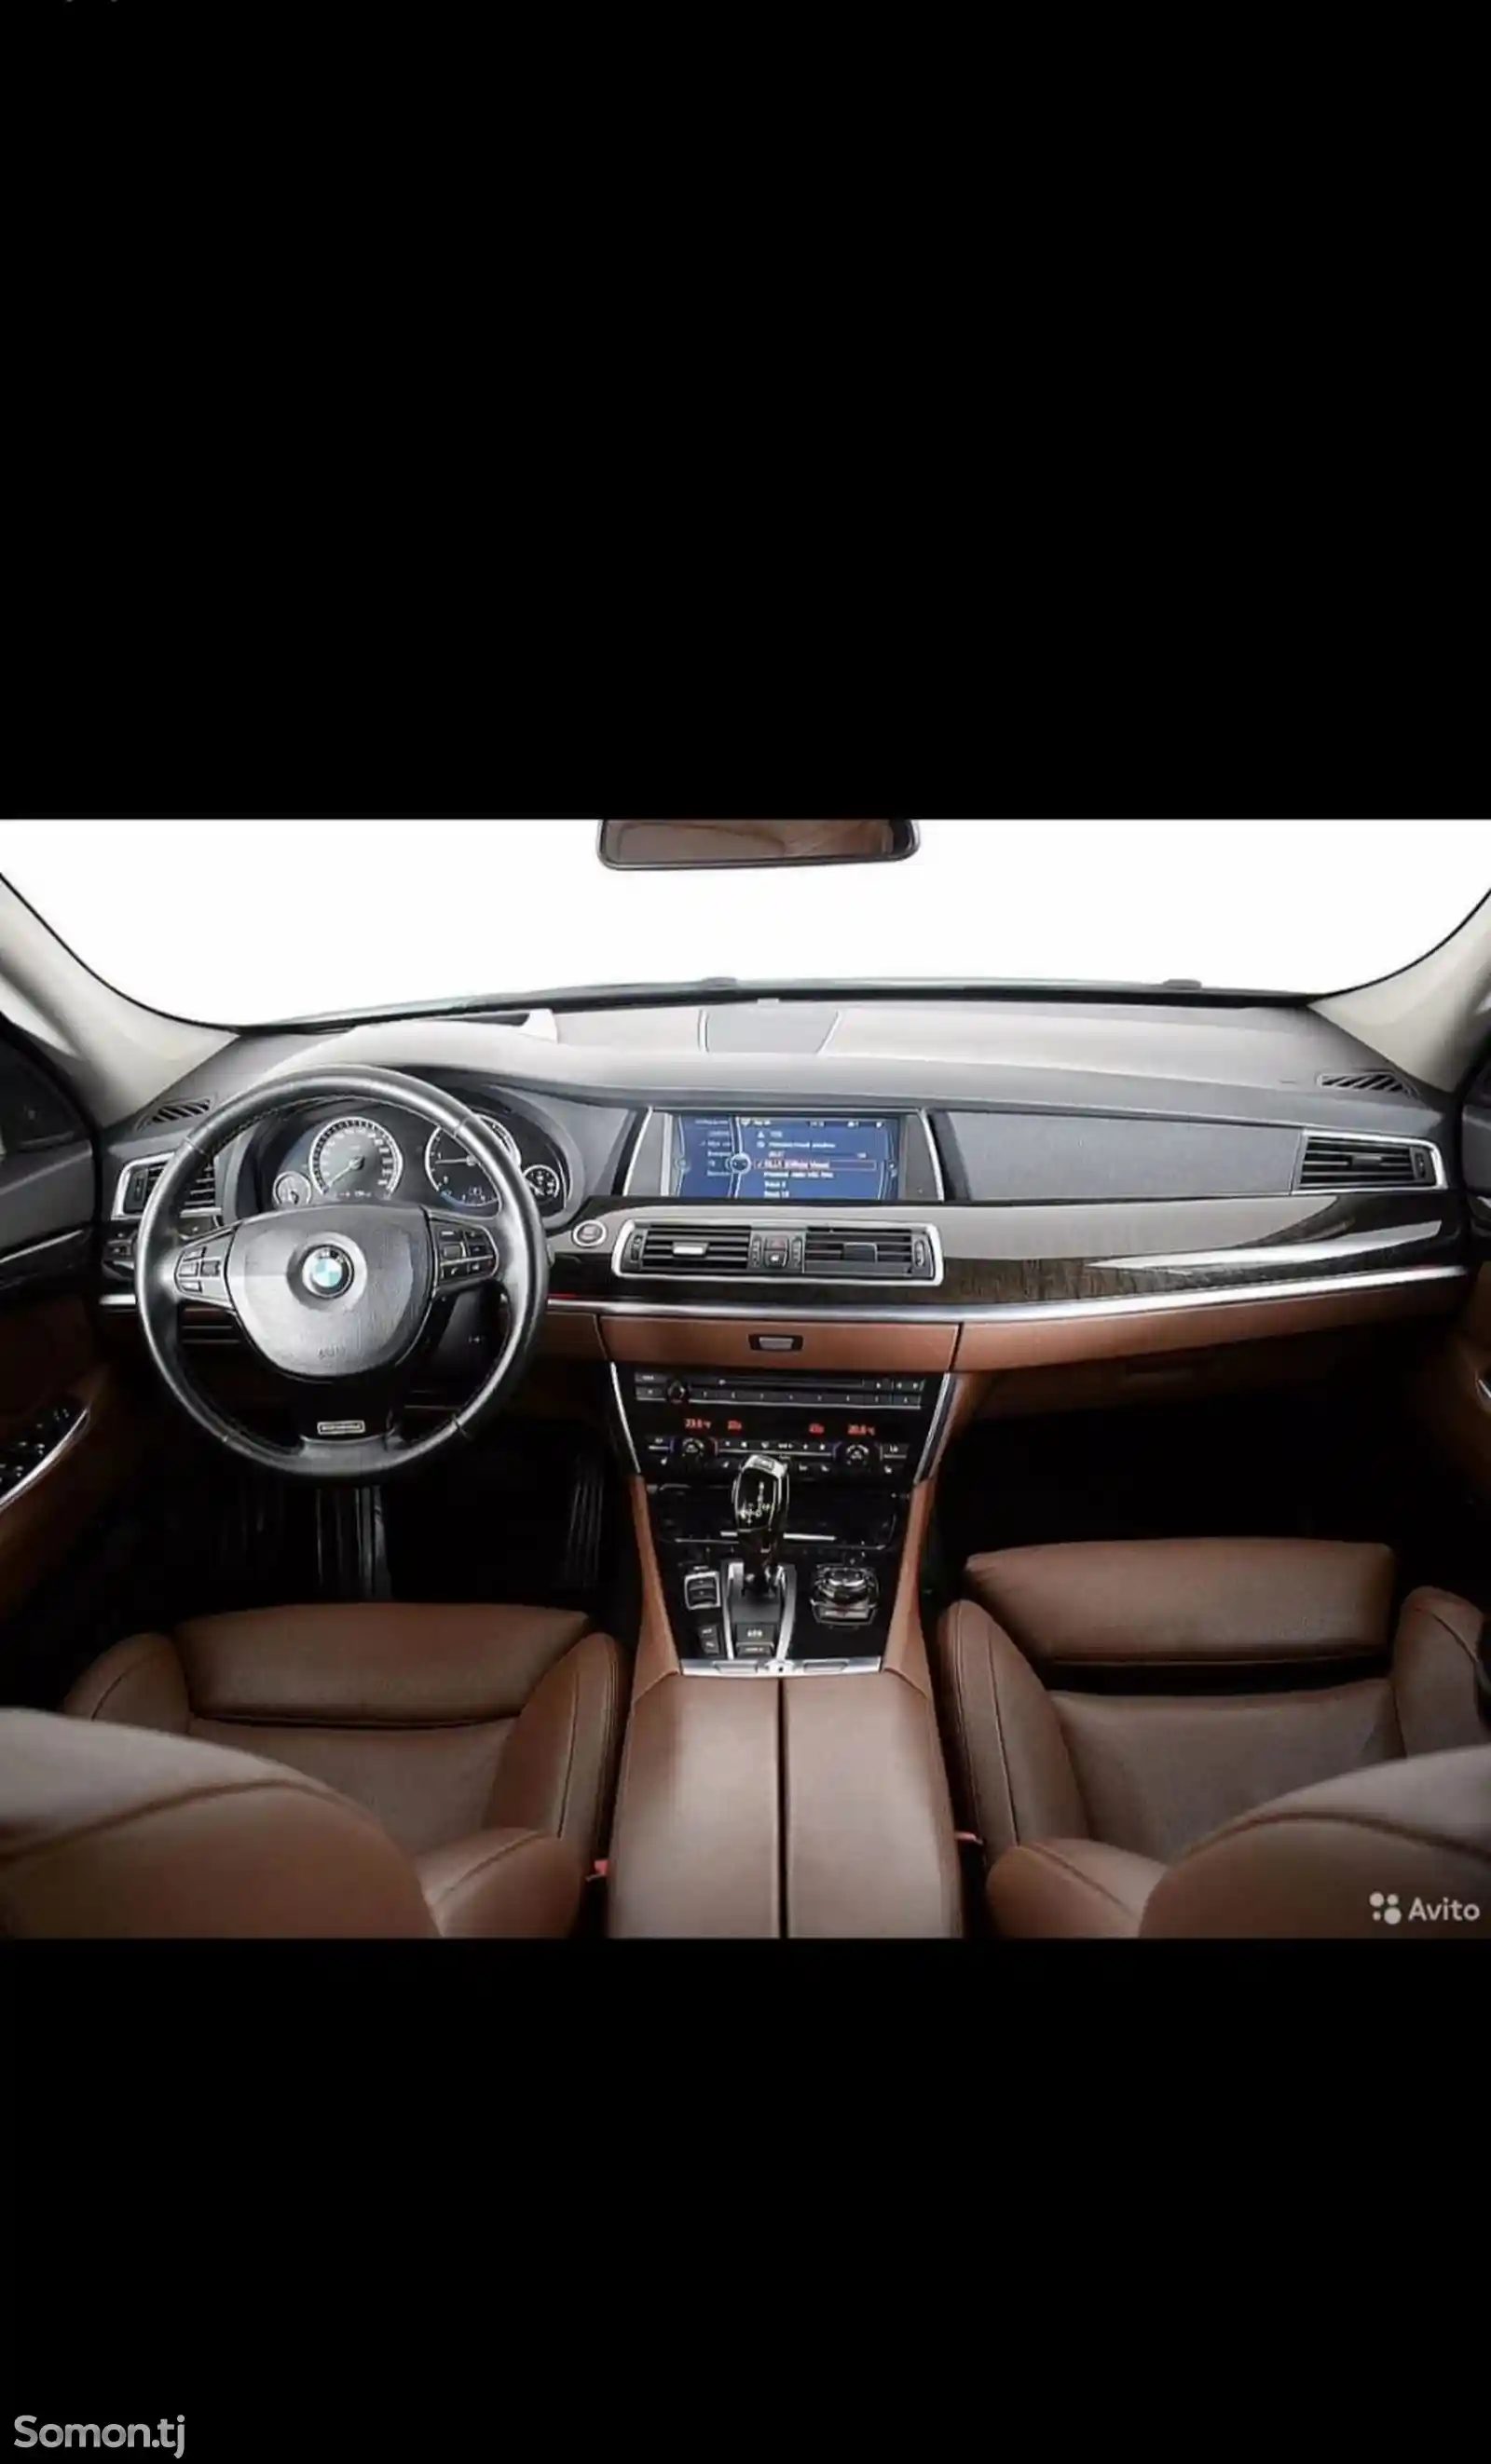 BMW 5 series, 2010-11